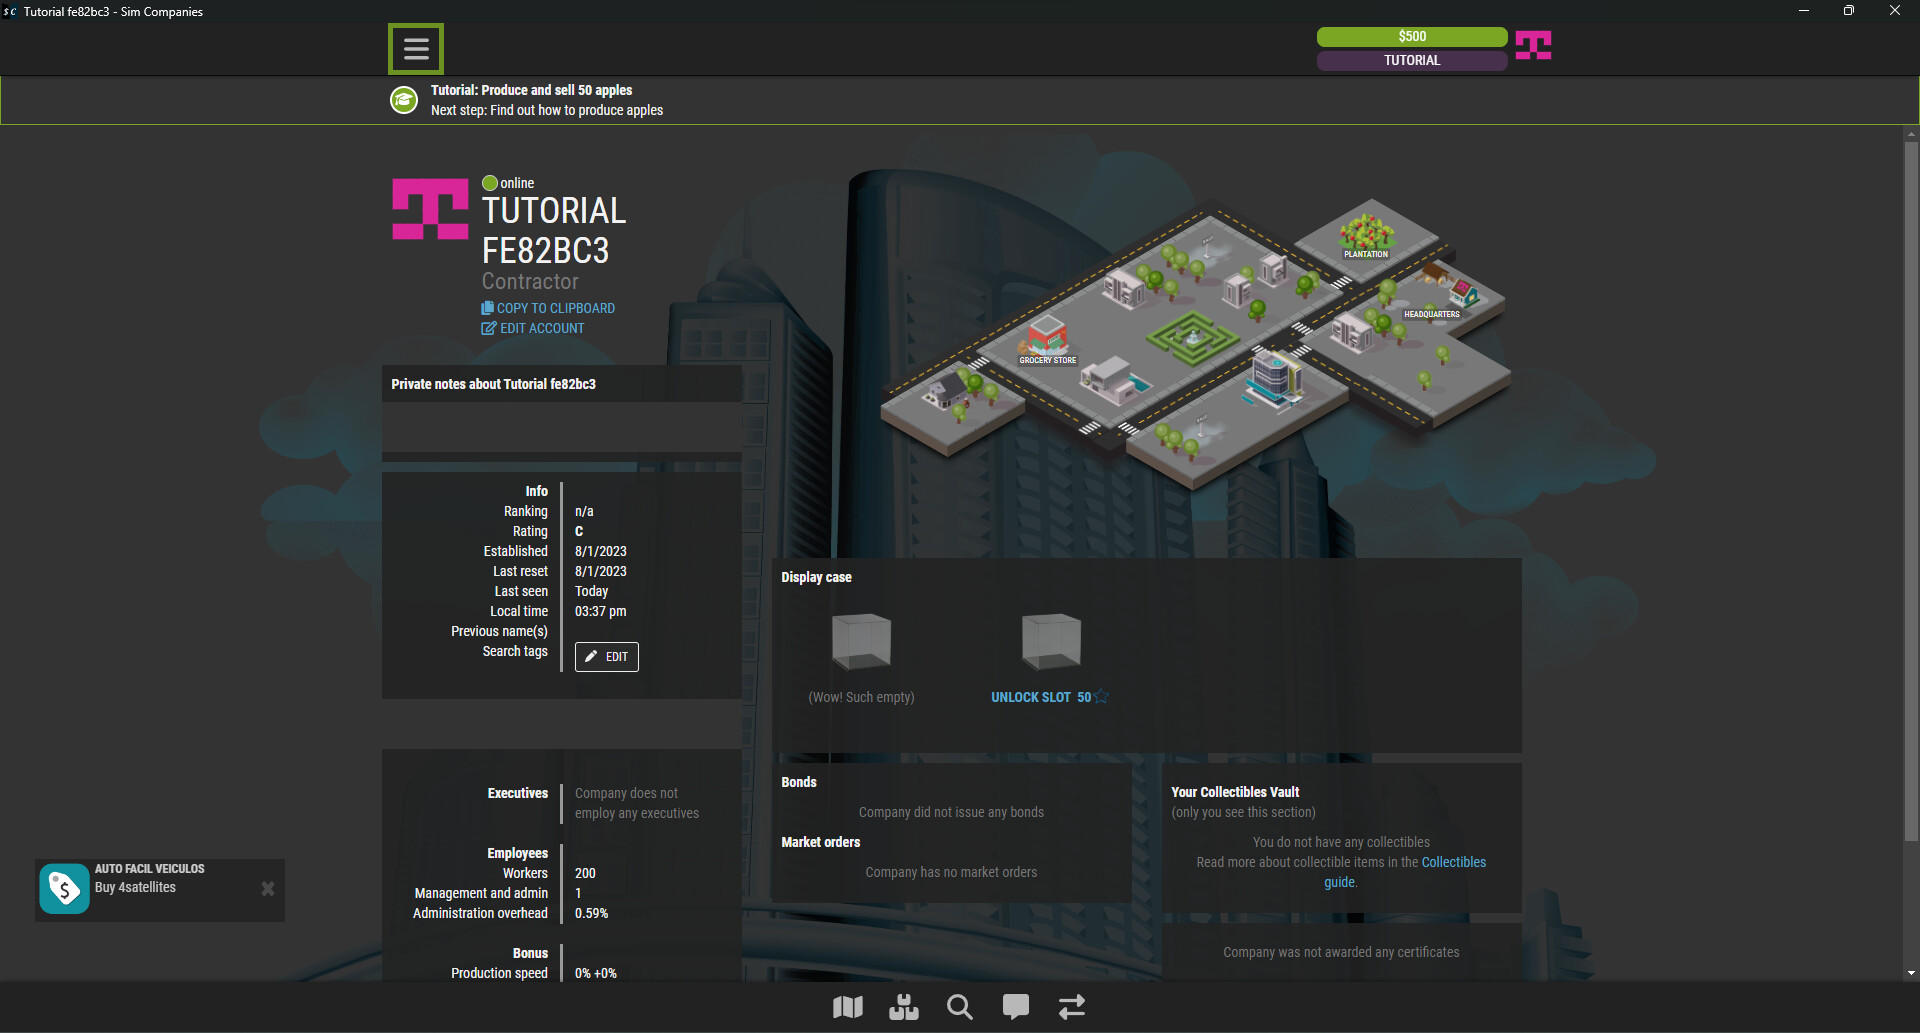 Screenshot of Sim Companies